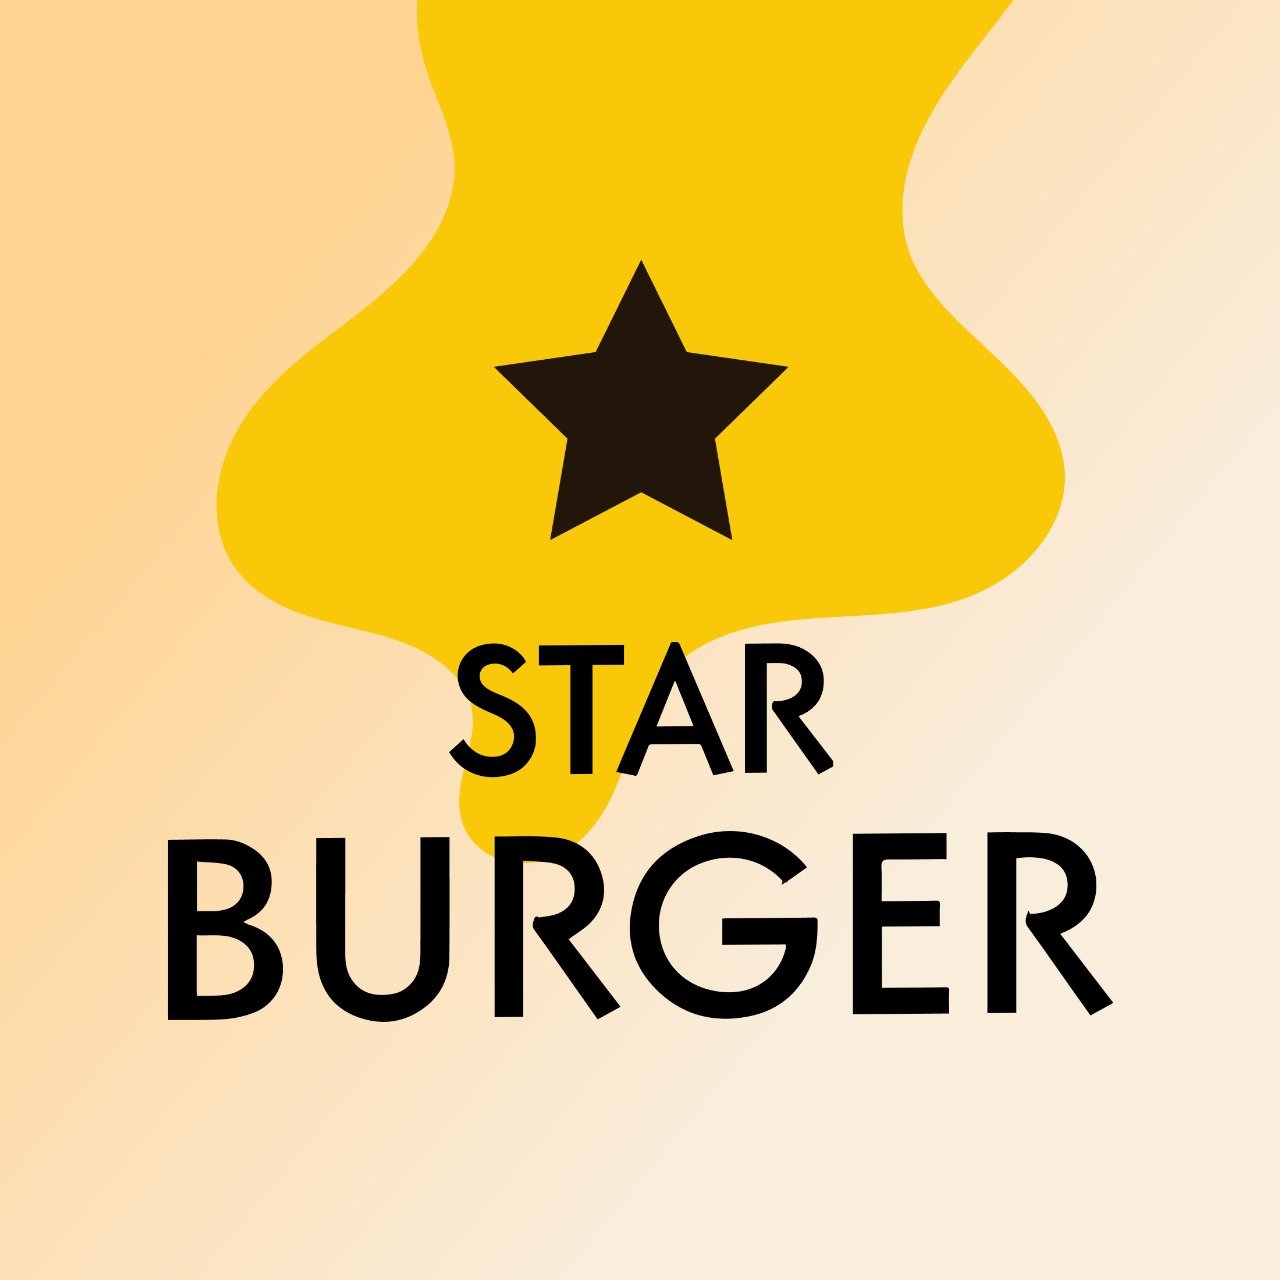 STAR BURGER